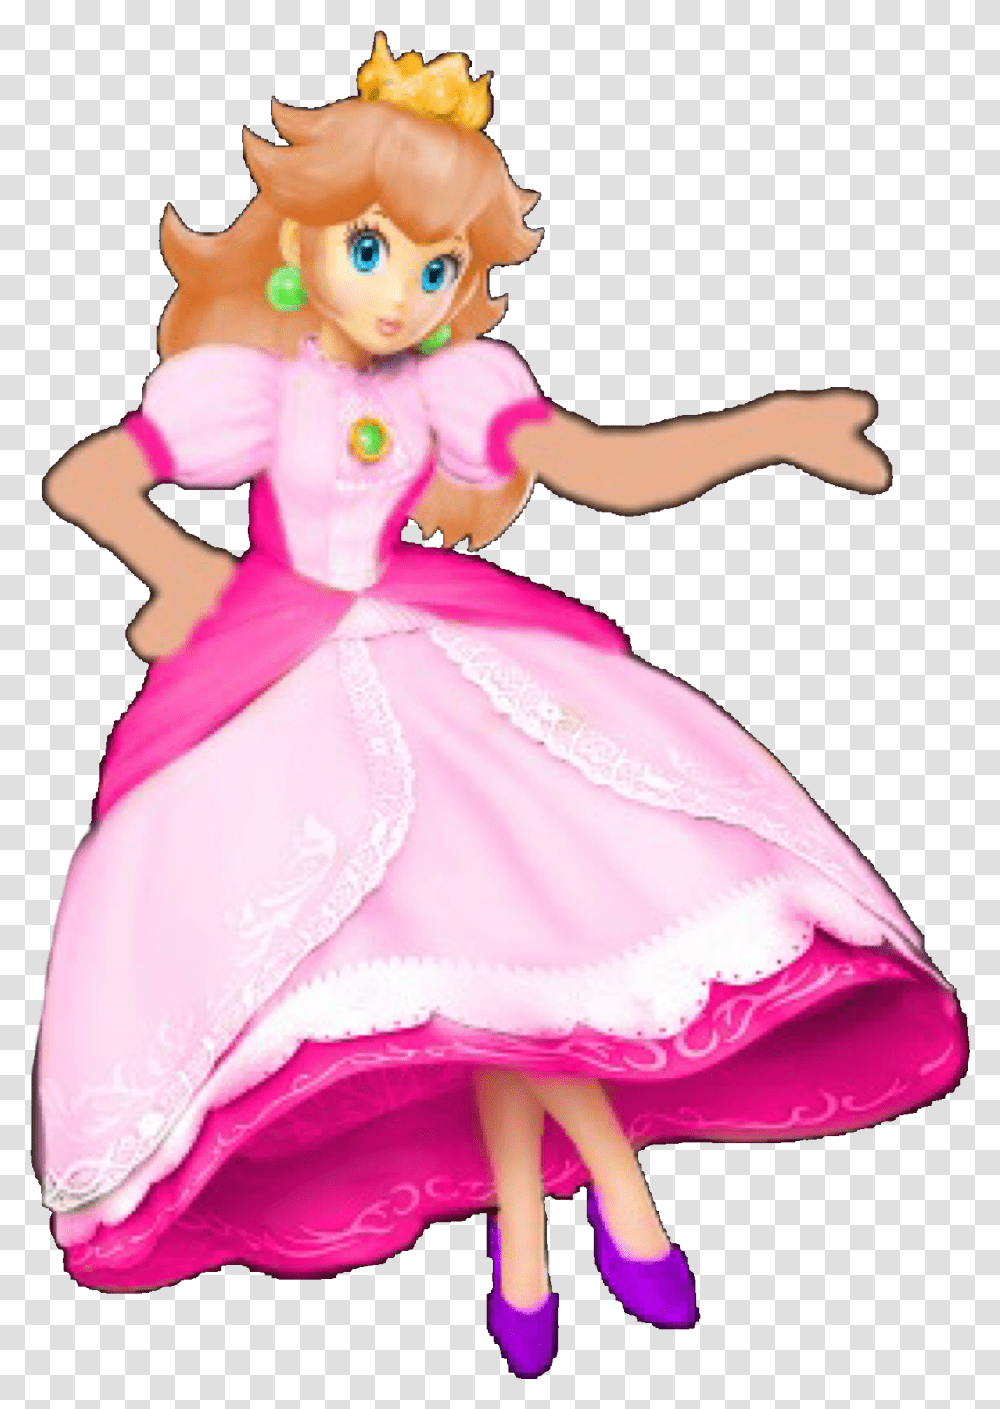 Princess Toadstool Dic Cartoons Peach Smash Bros Background, Doll, Toy, Barbie, Figurine Transparent Png